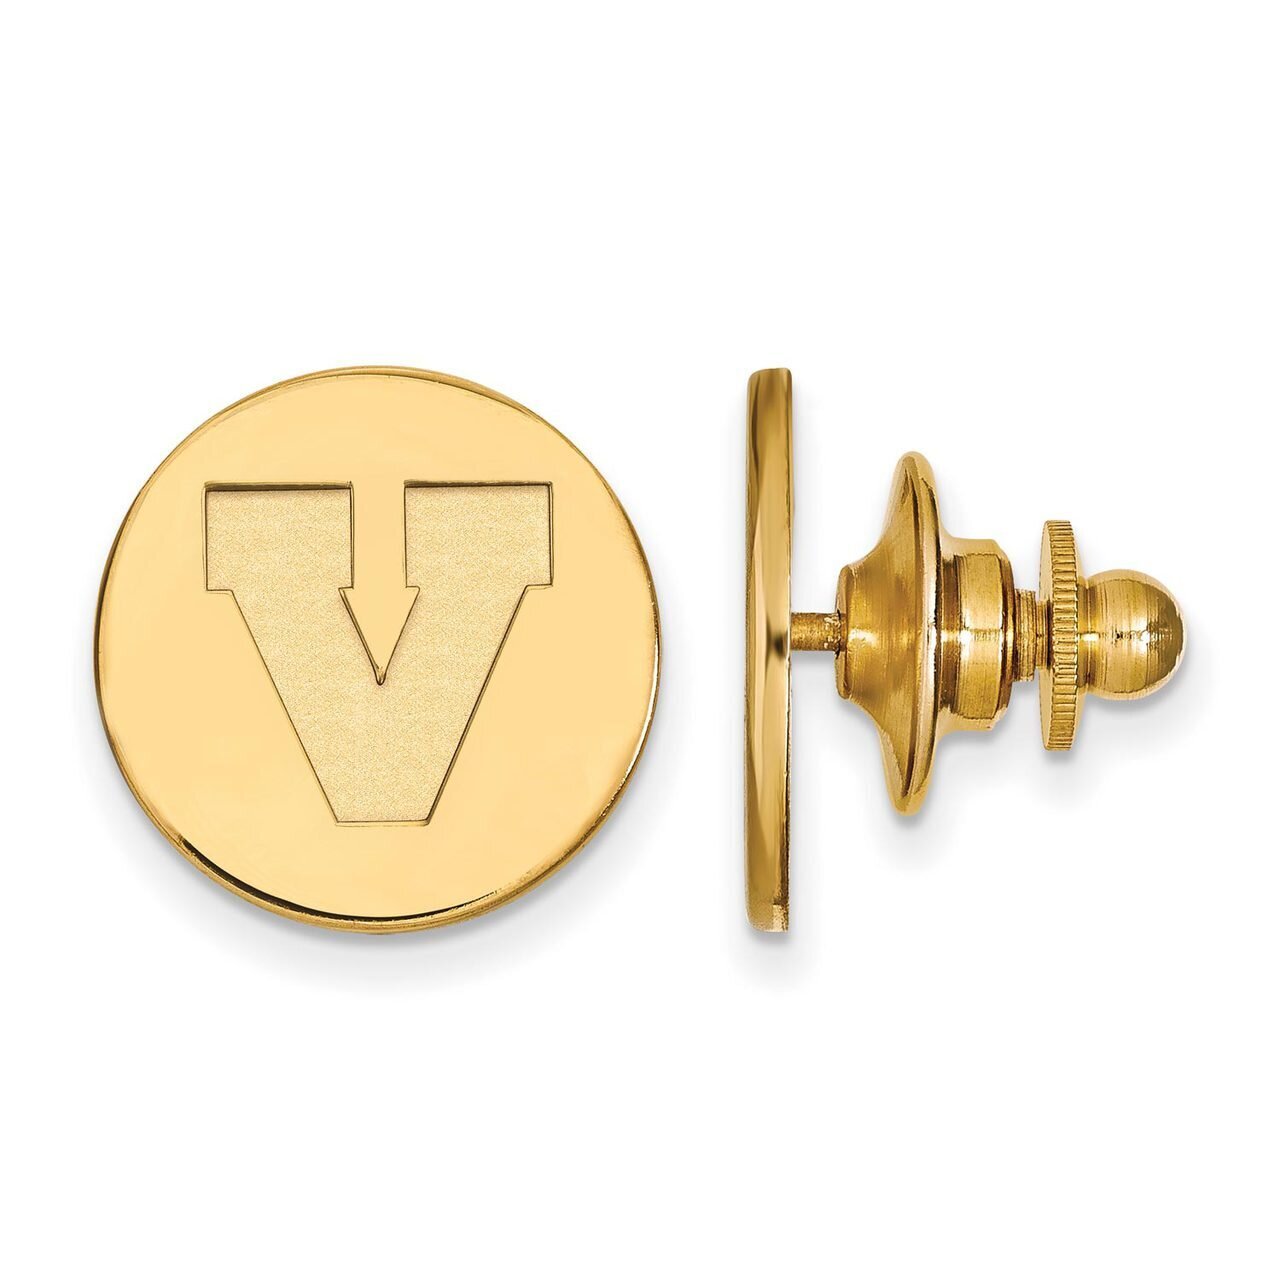 University of Virginia Lapel Pin Gold-plated Silver GP051UVA